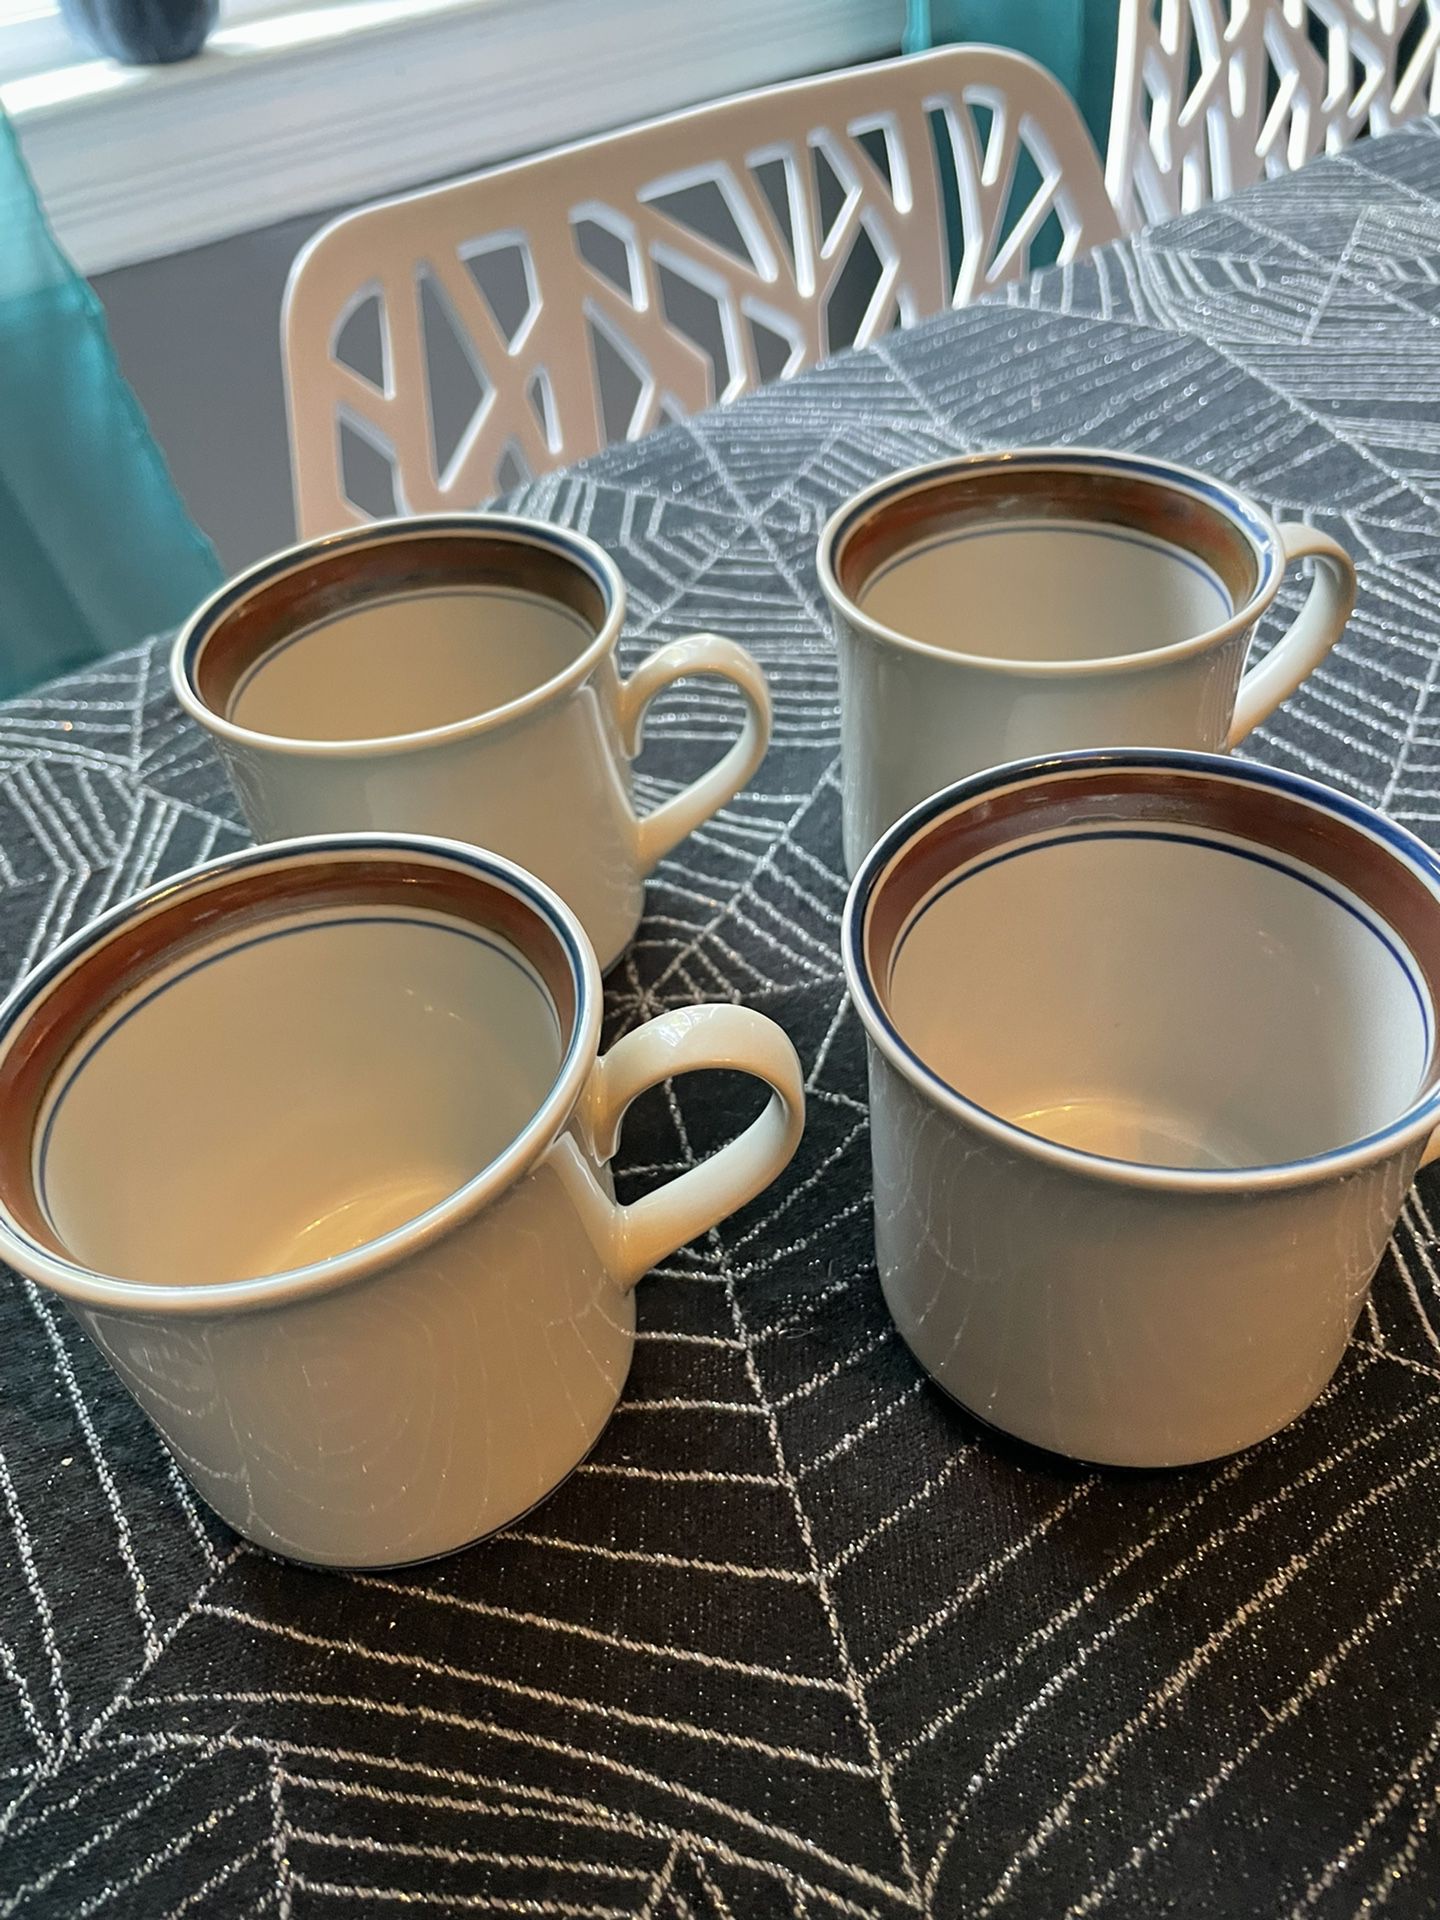 Salem Stoneware Georgetown  Tea/Coffee Cups Lot Of 4